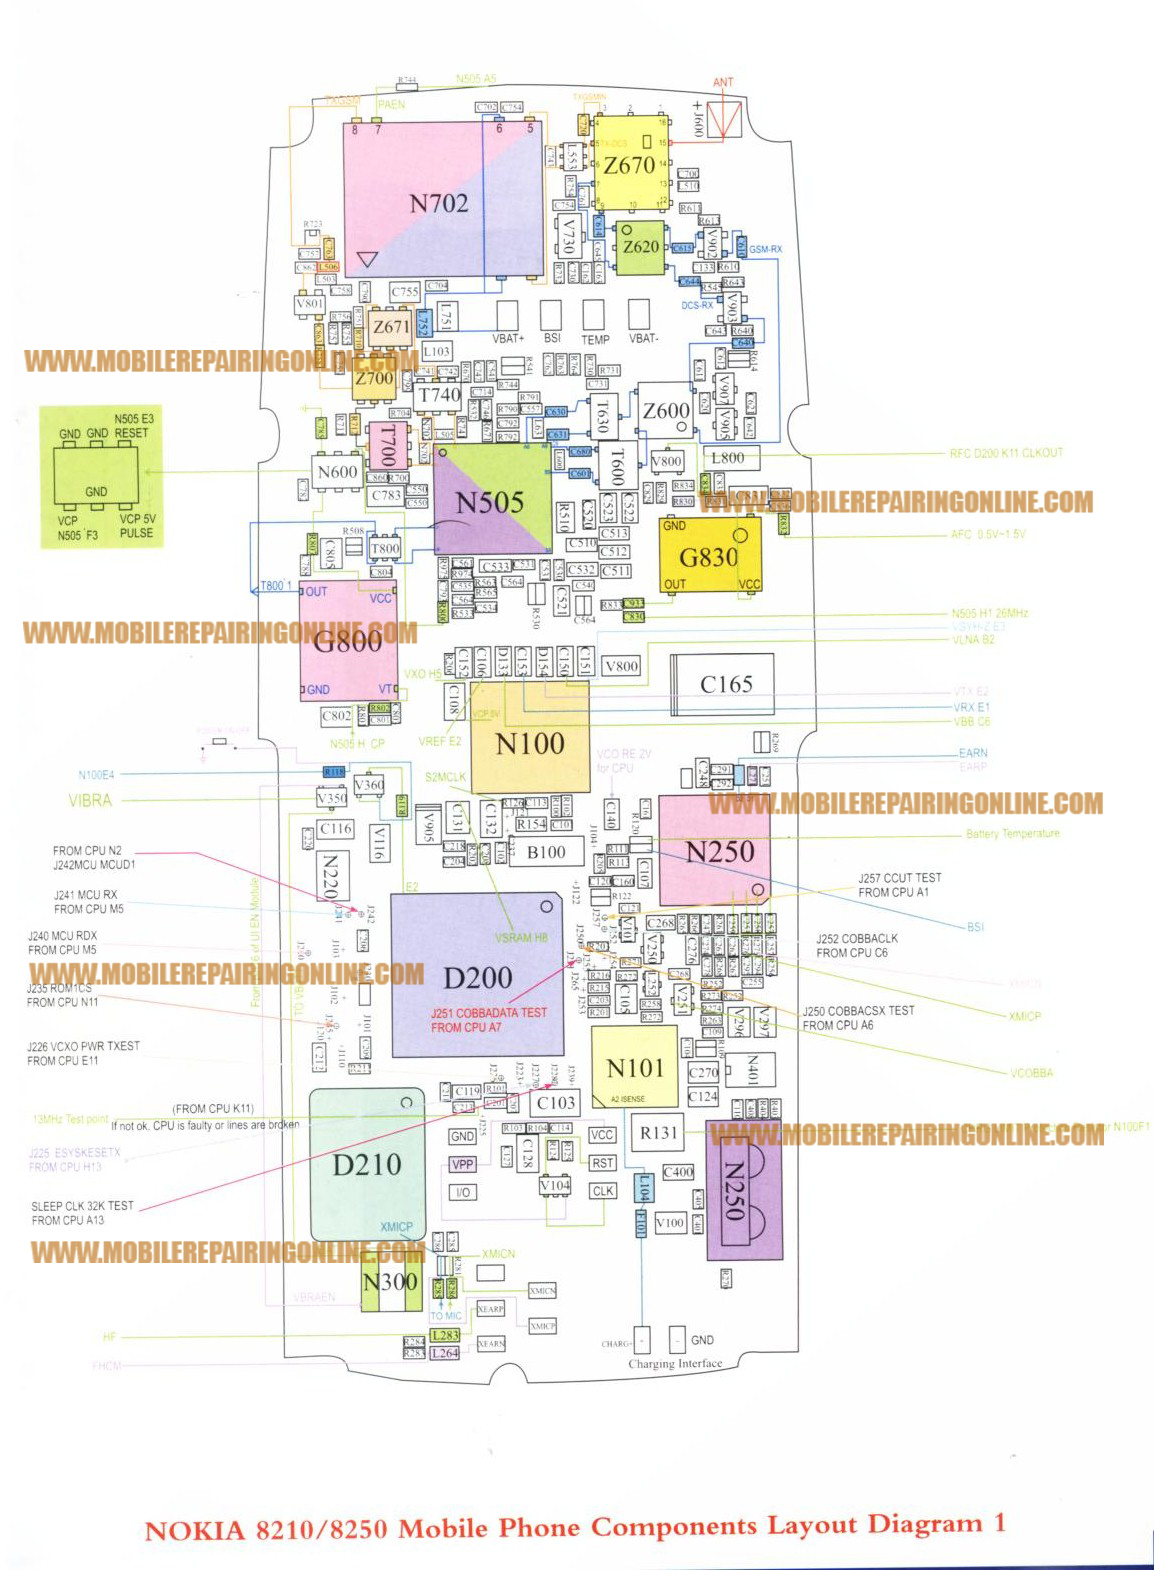 Schematic Diagram for Nokia Mobile | Mobile Repairing Online